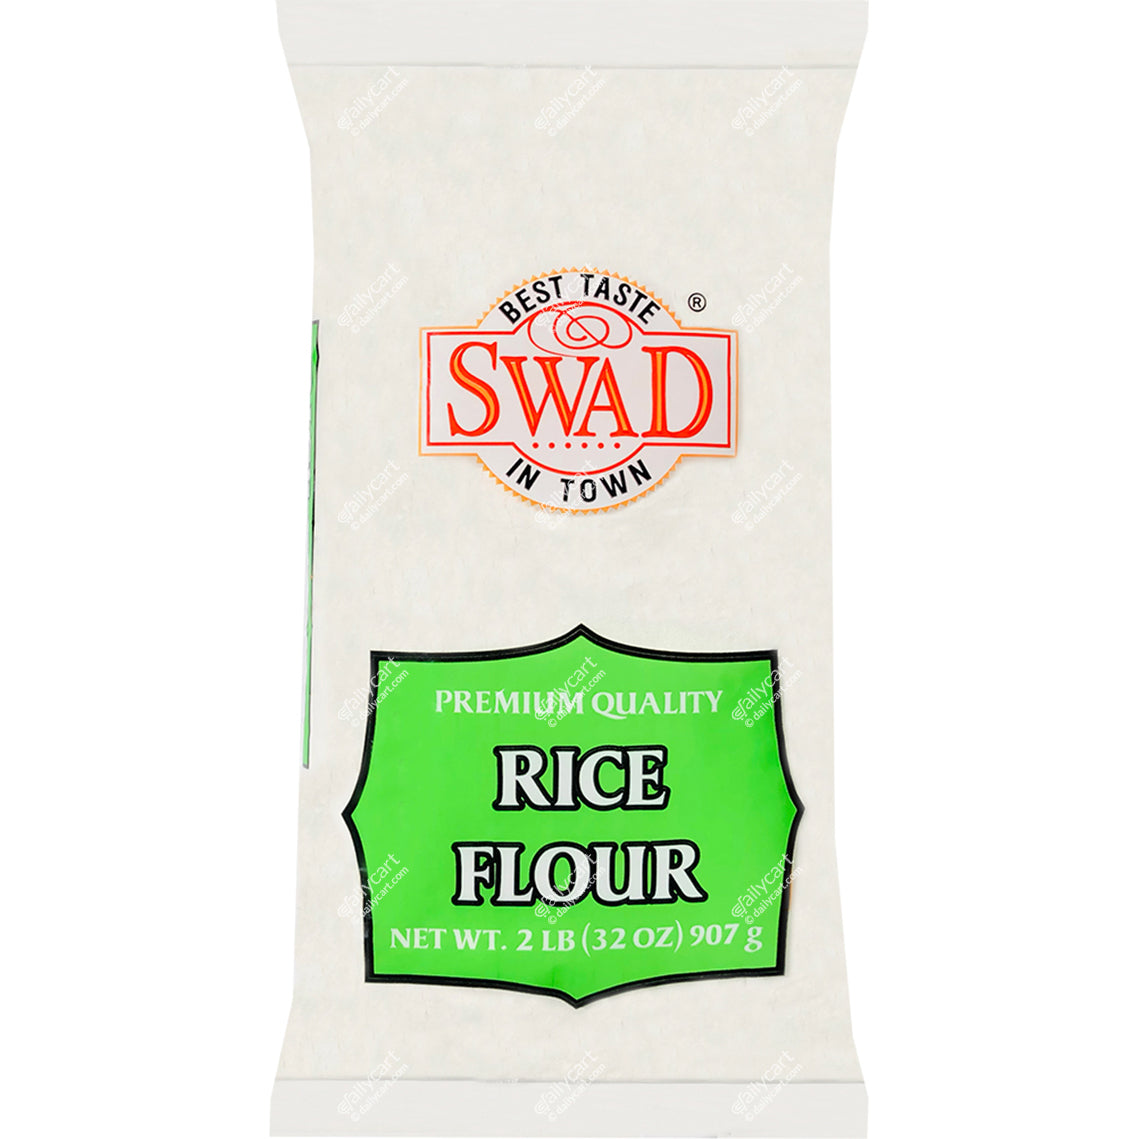 Swad Rice Flour, 2 lb